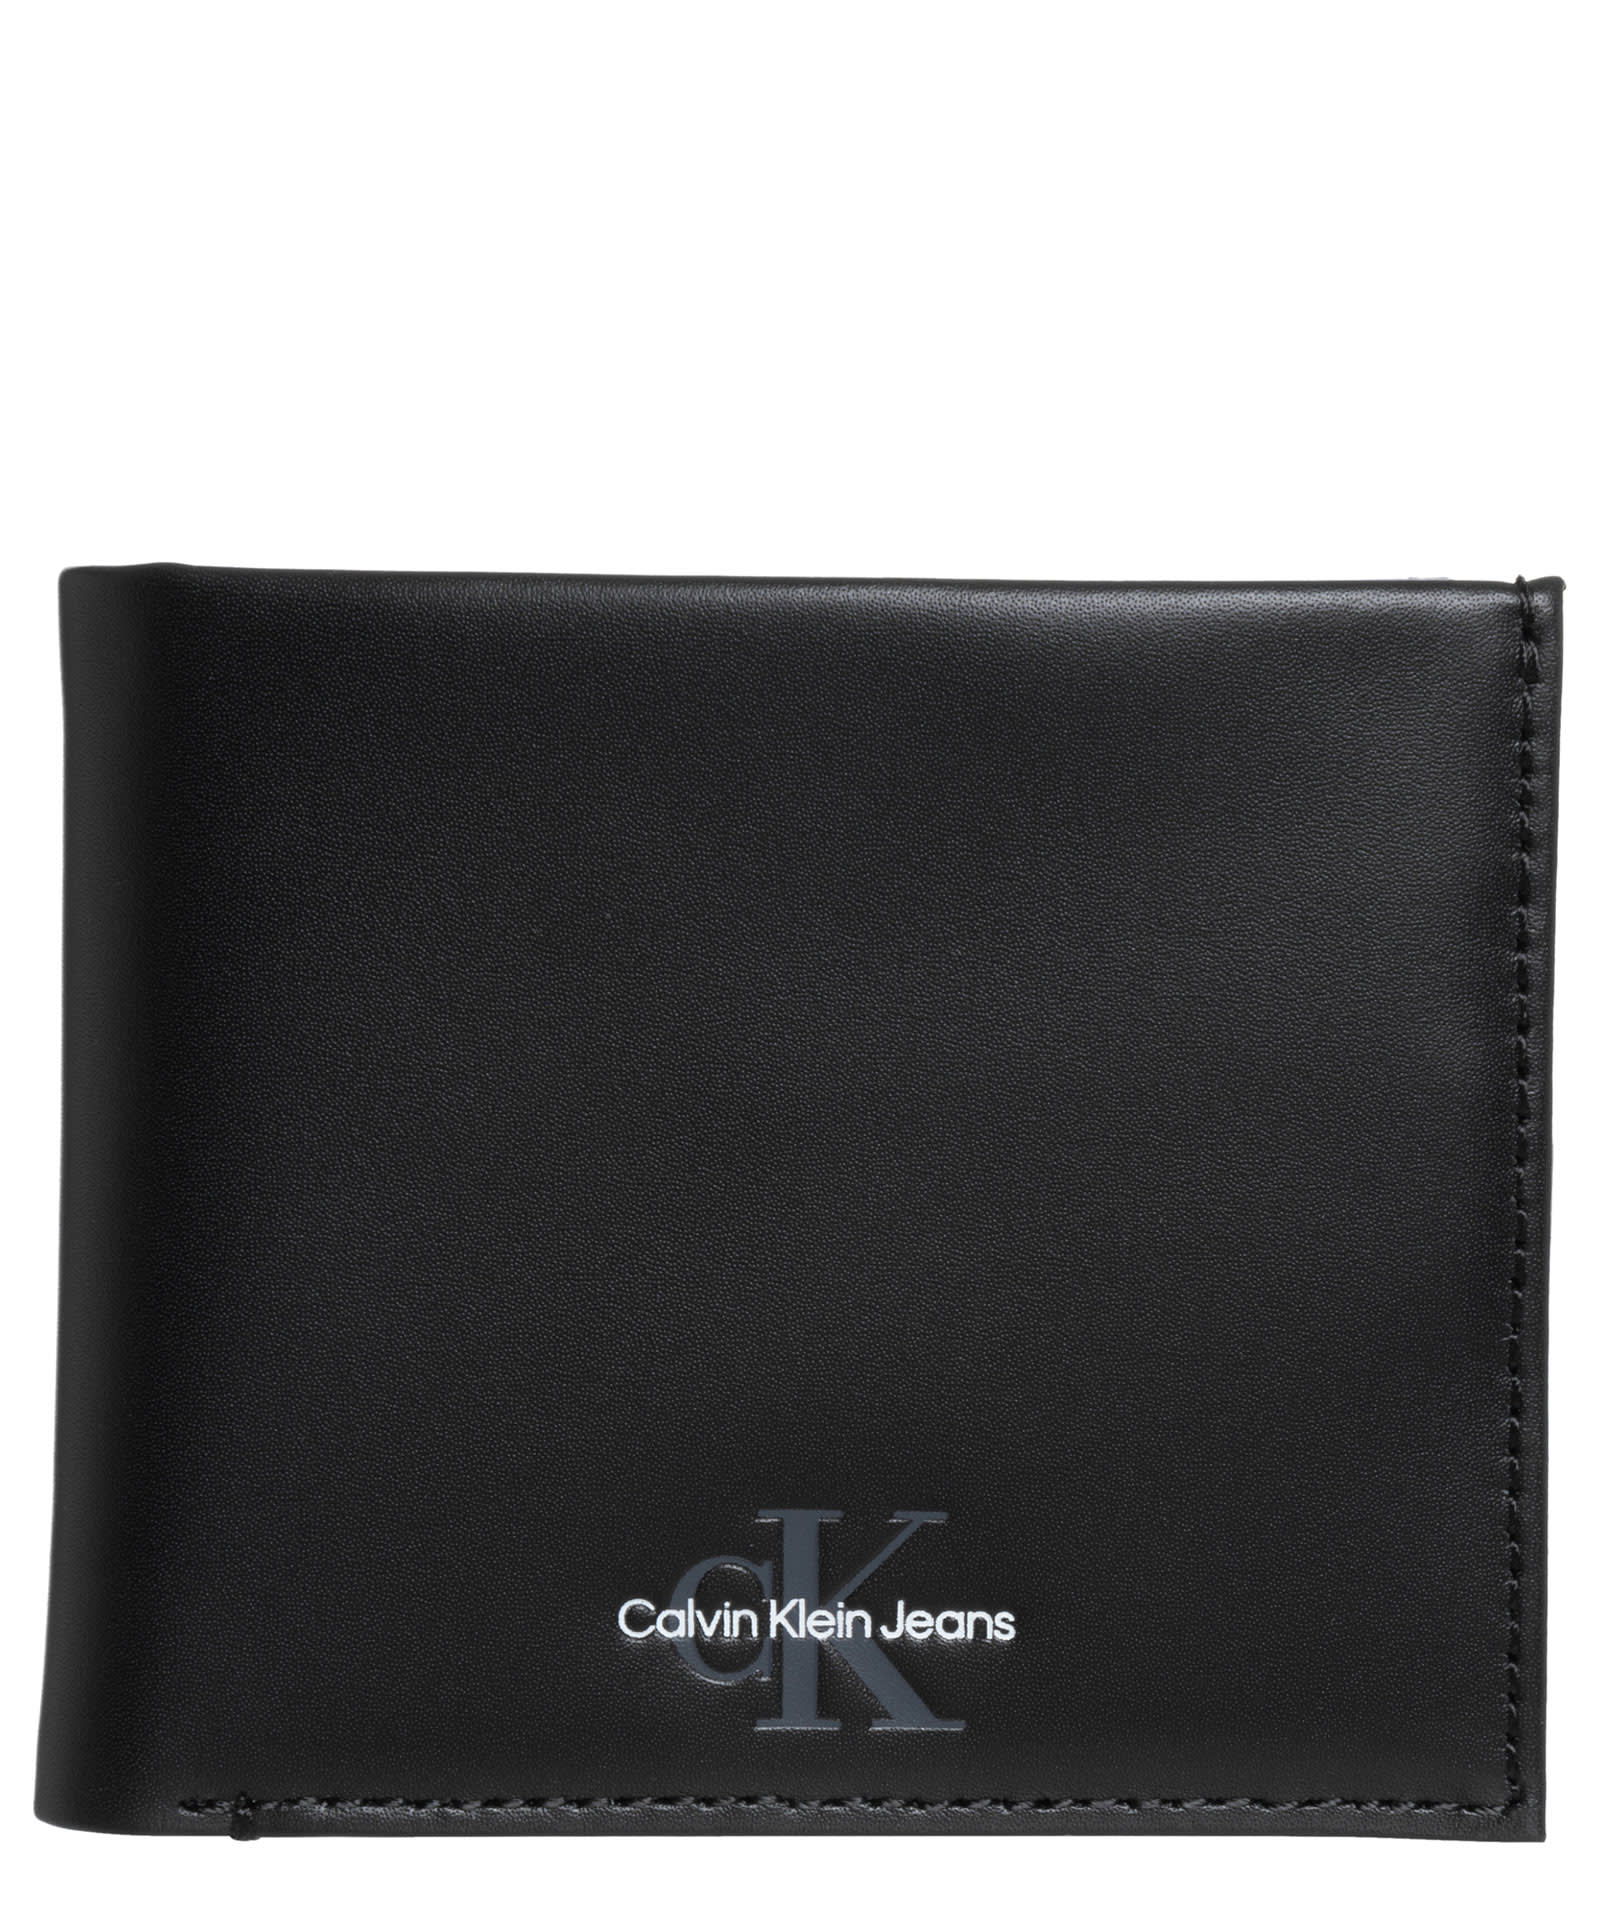 Calvin Klein Jeans Leather Wallet